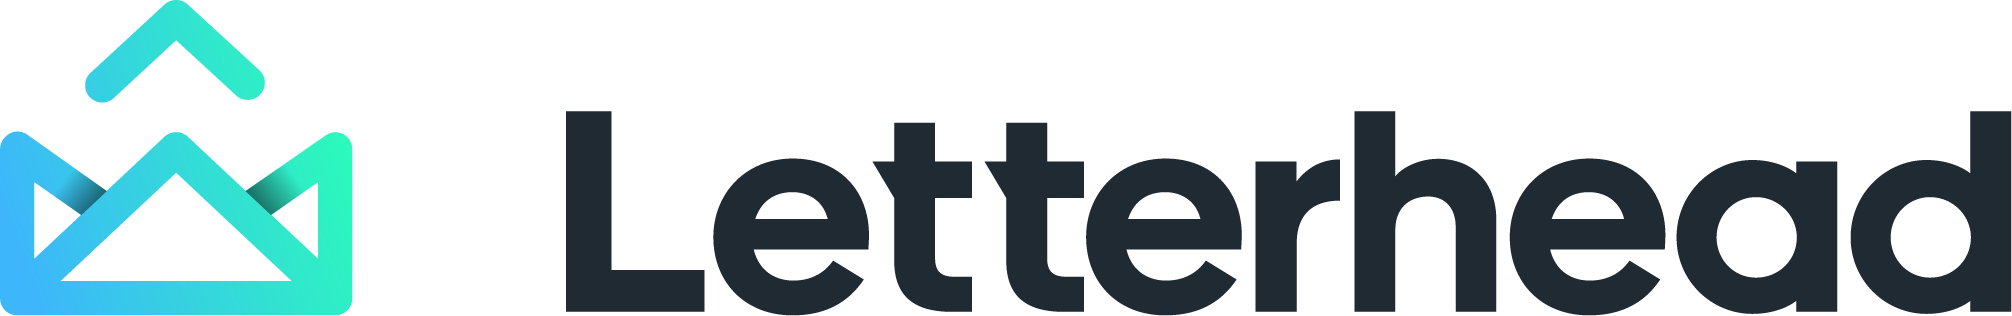 Letterhead logo